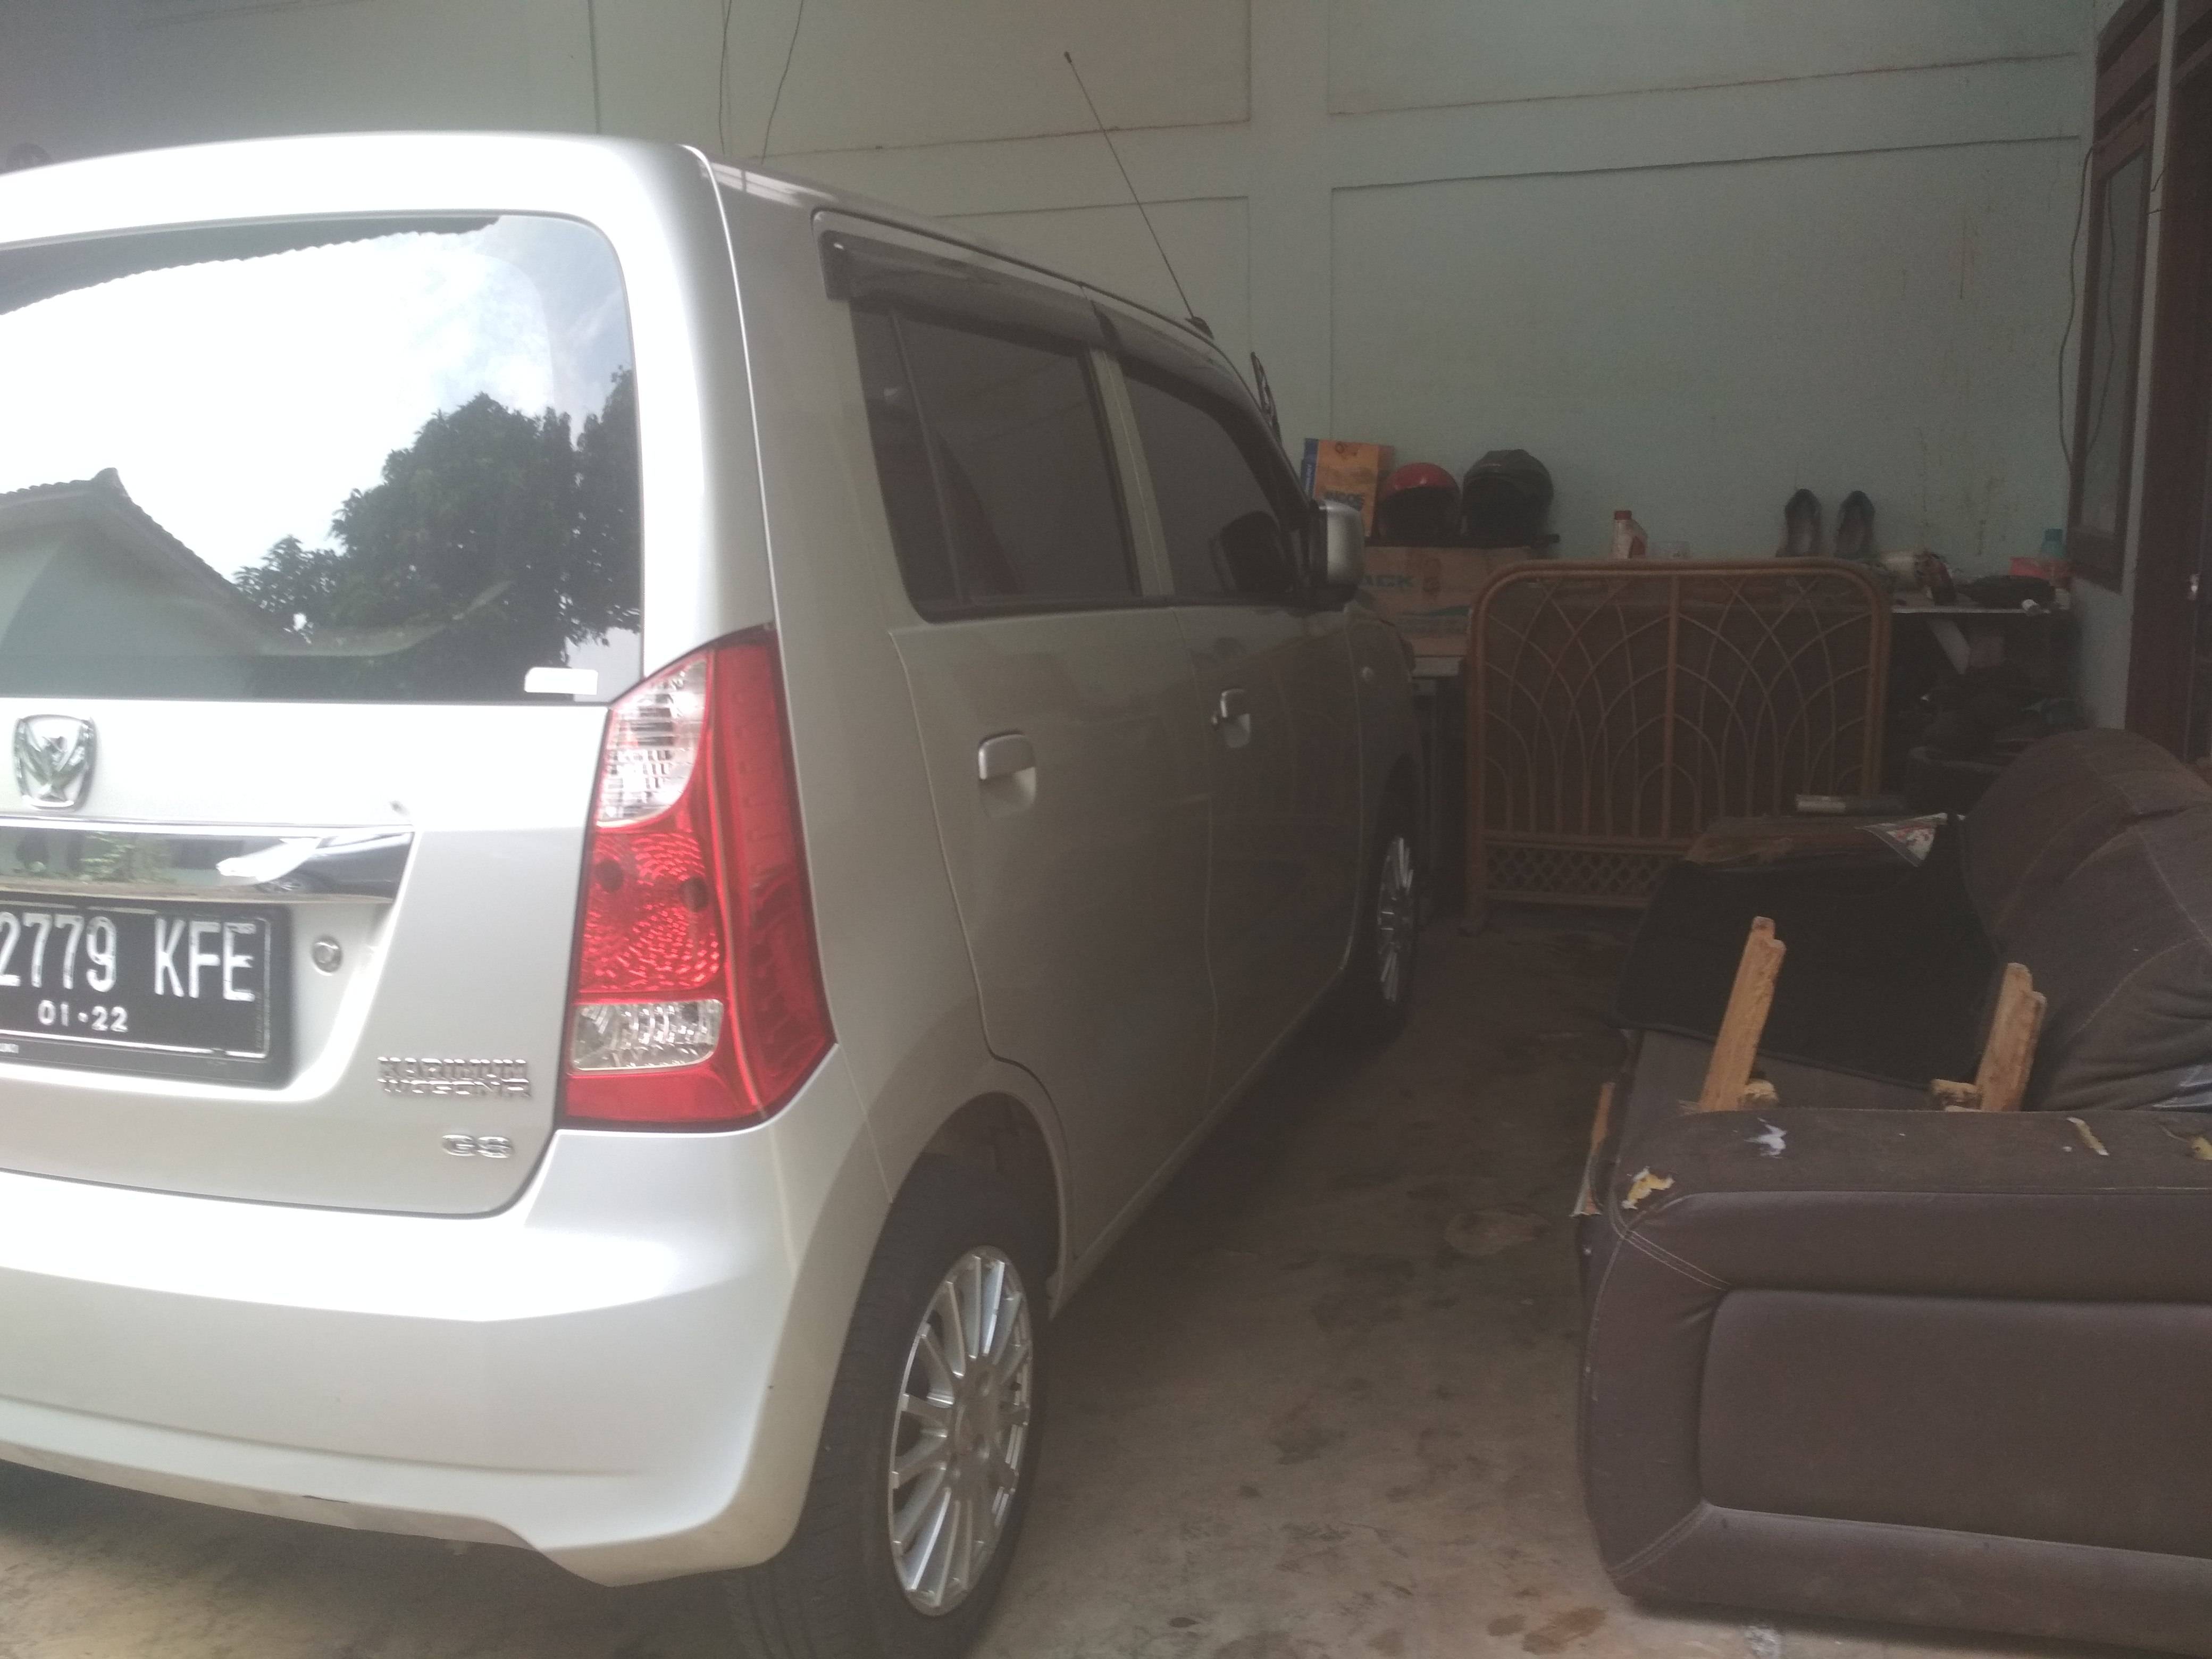 Dijual 2016 Suzuki Karimun Wagon R GS GS AGS Airbag GS AGS Airbag Bekas